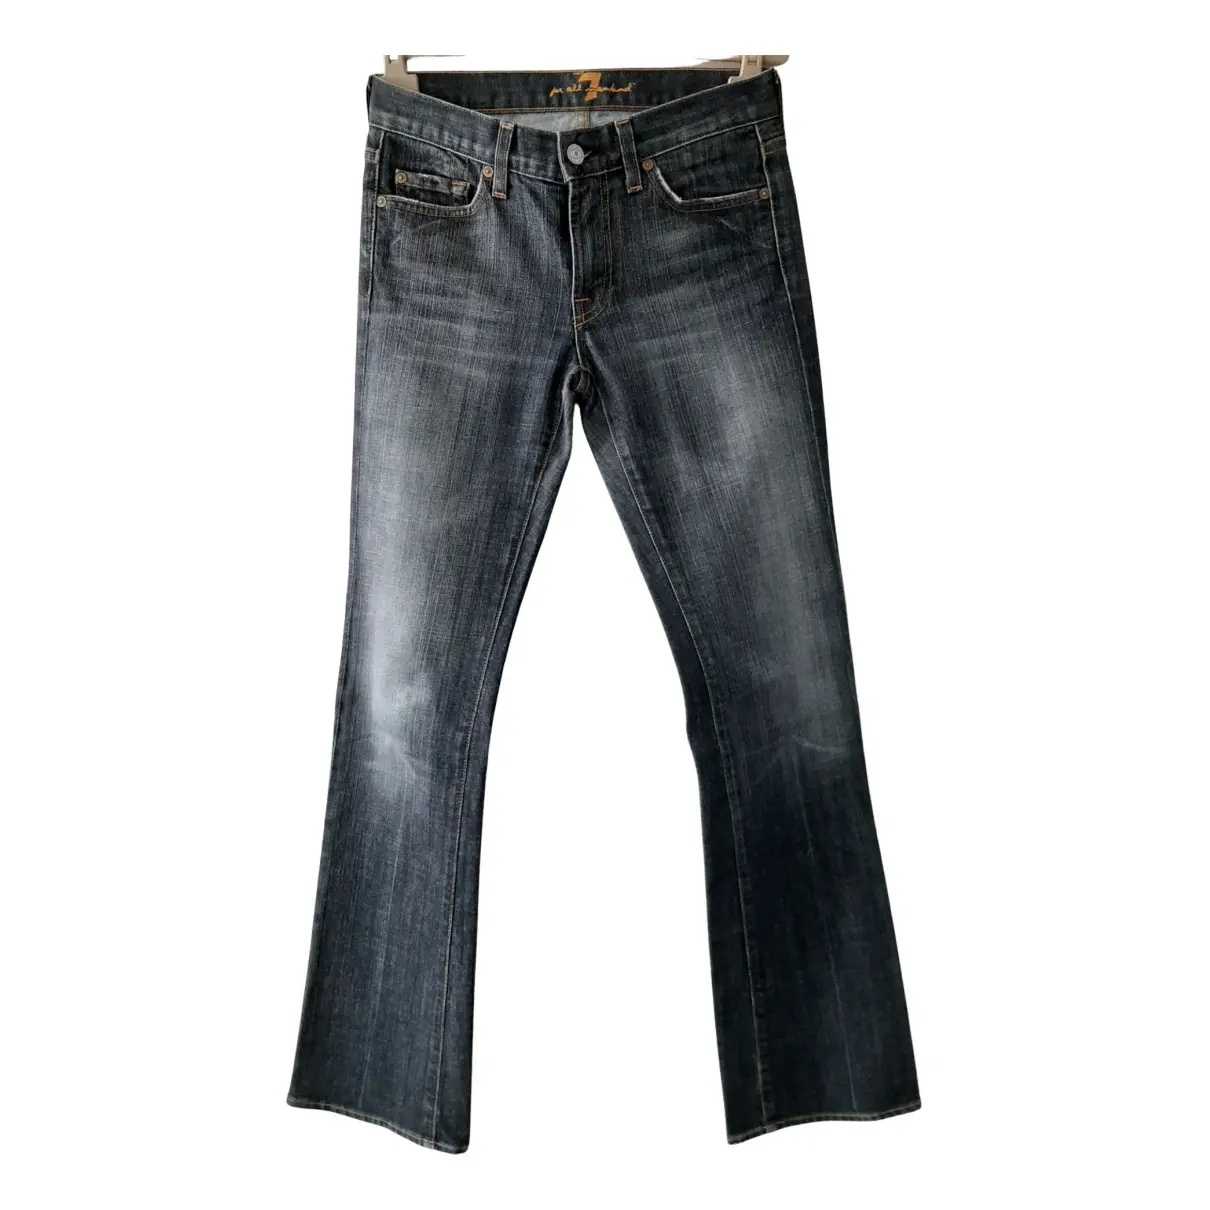 Black Cotton - elasthane Jeans 7 For All Mankind - Vintage